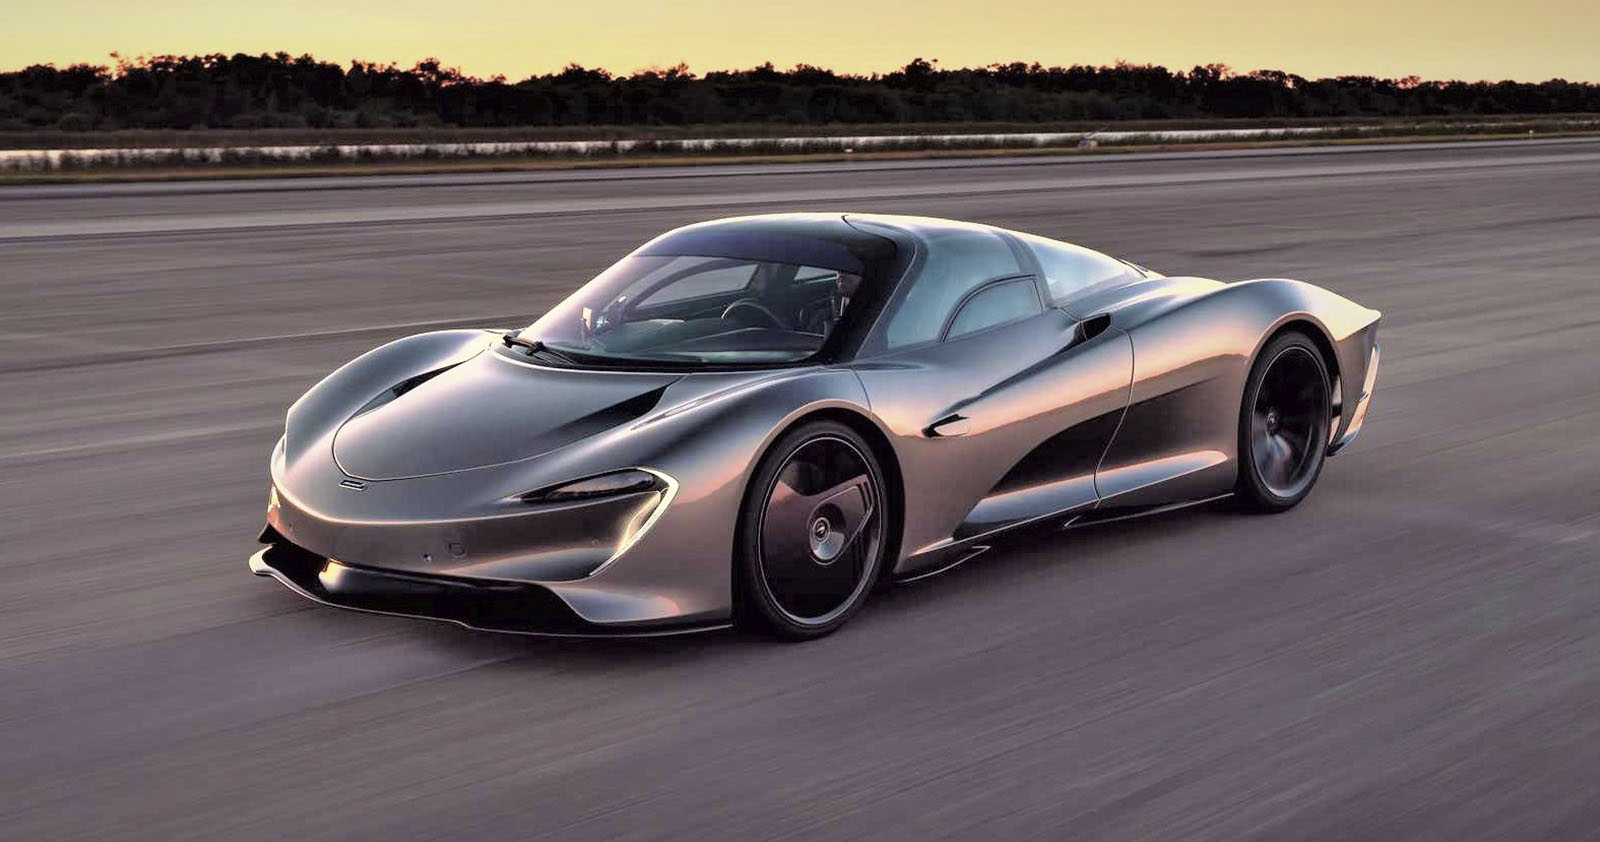 2022 silver McLaren Speedtail hybrid hypercar